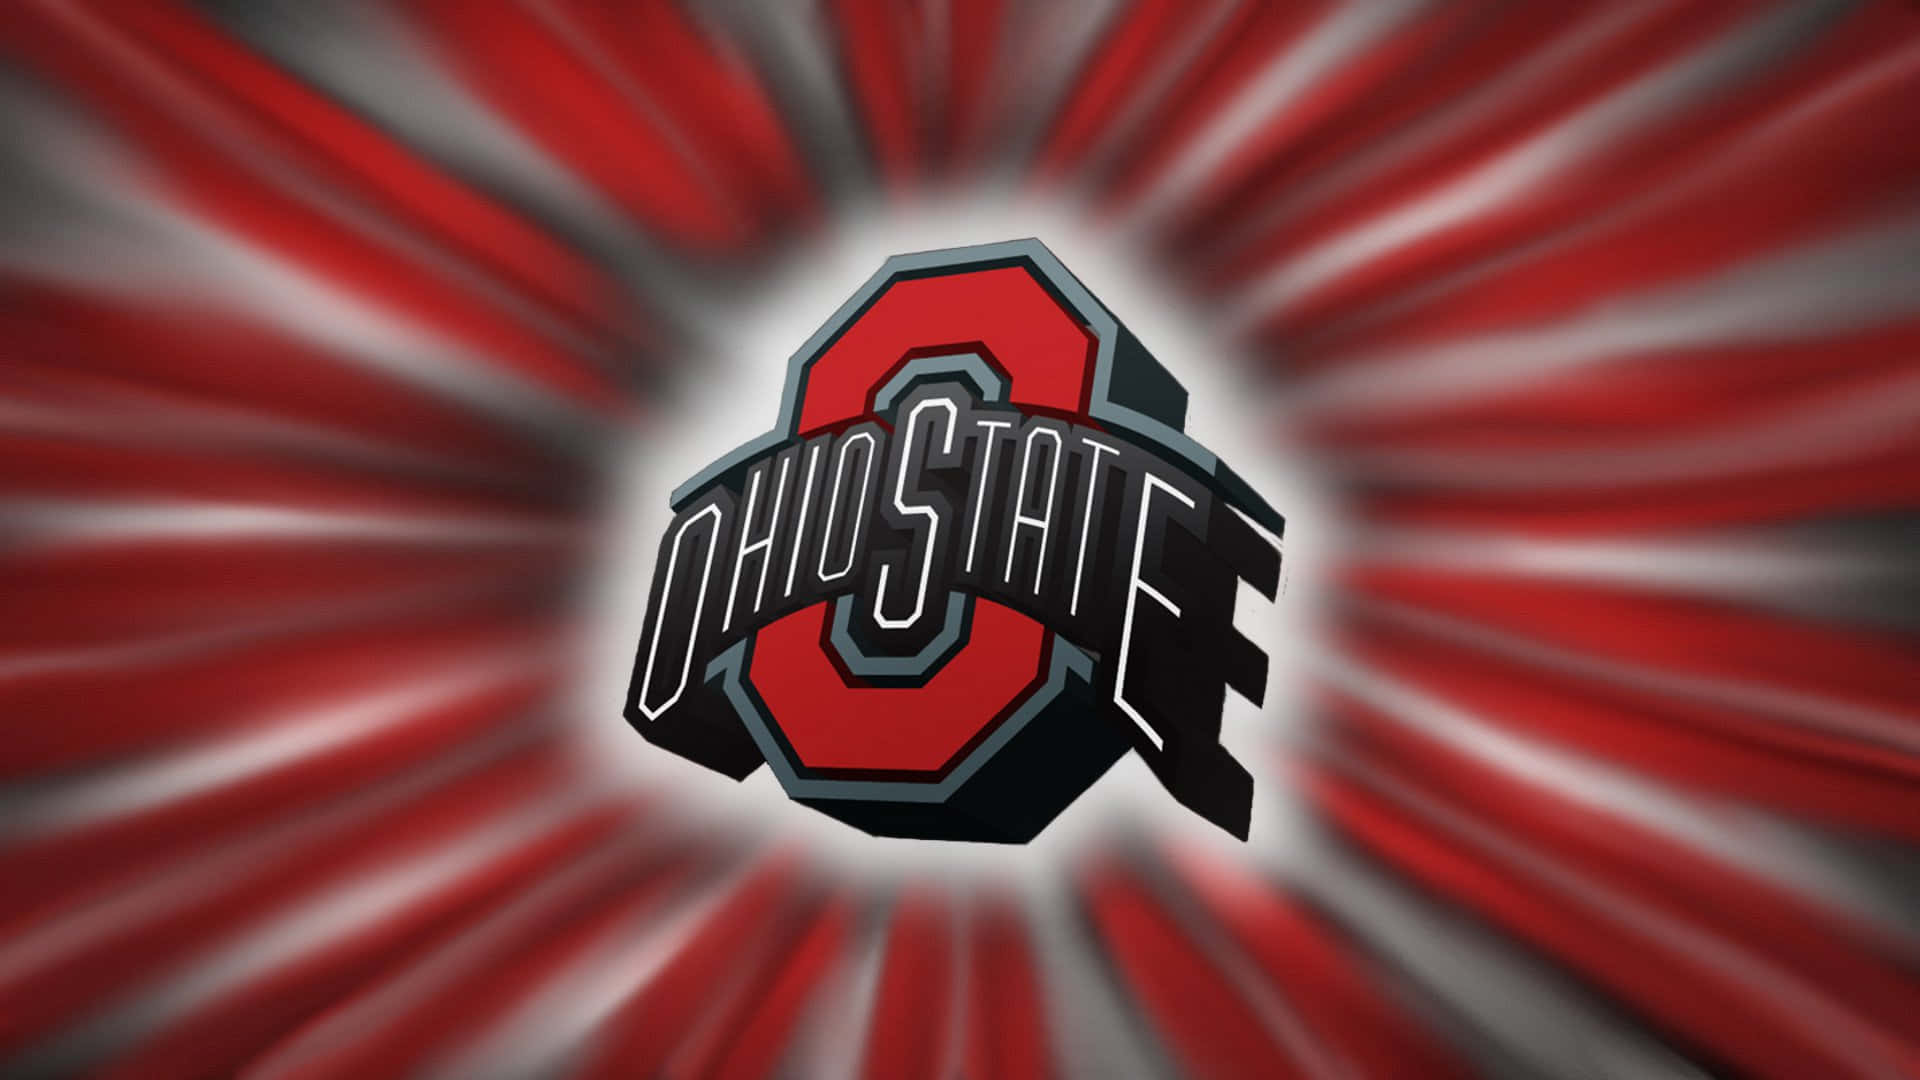 Modern Ohio State Football Team Graphic Logo Design Wallpaper